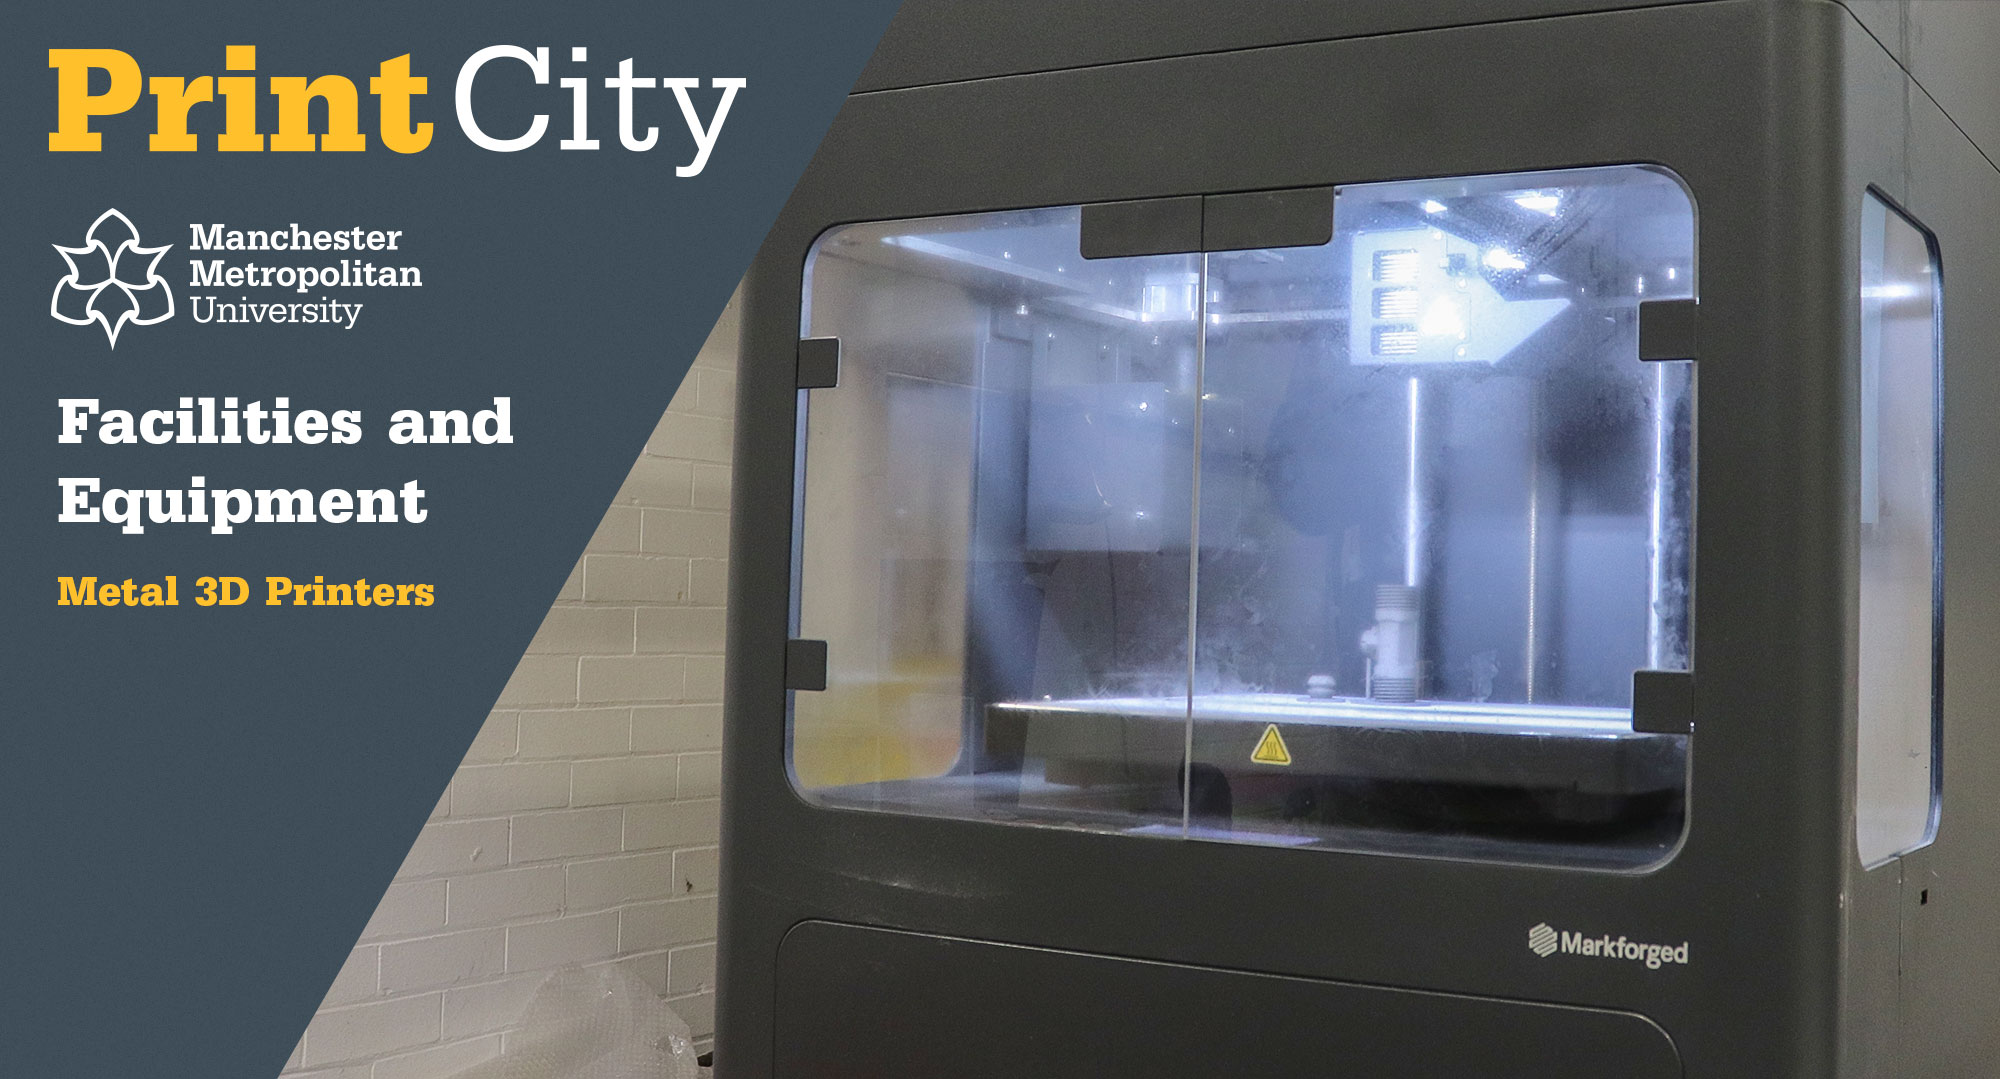 Metal 3D Printers - PrintCity - Manchester Metropolitan University - Facilities and Equipment